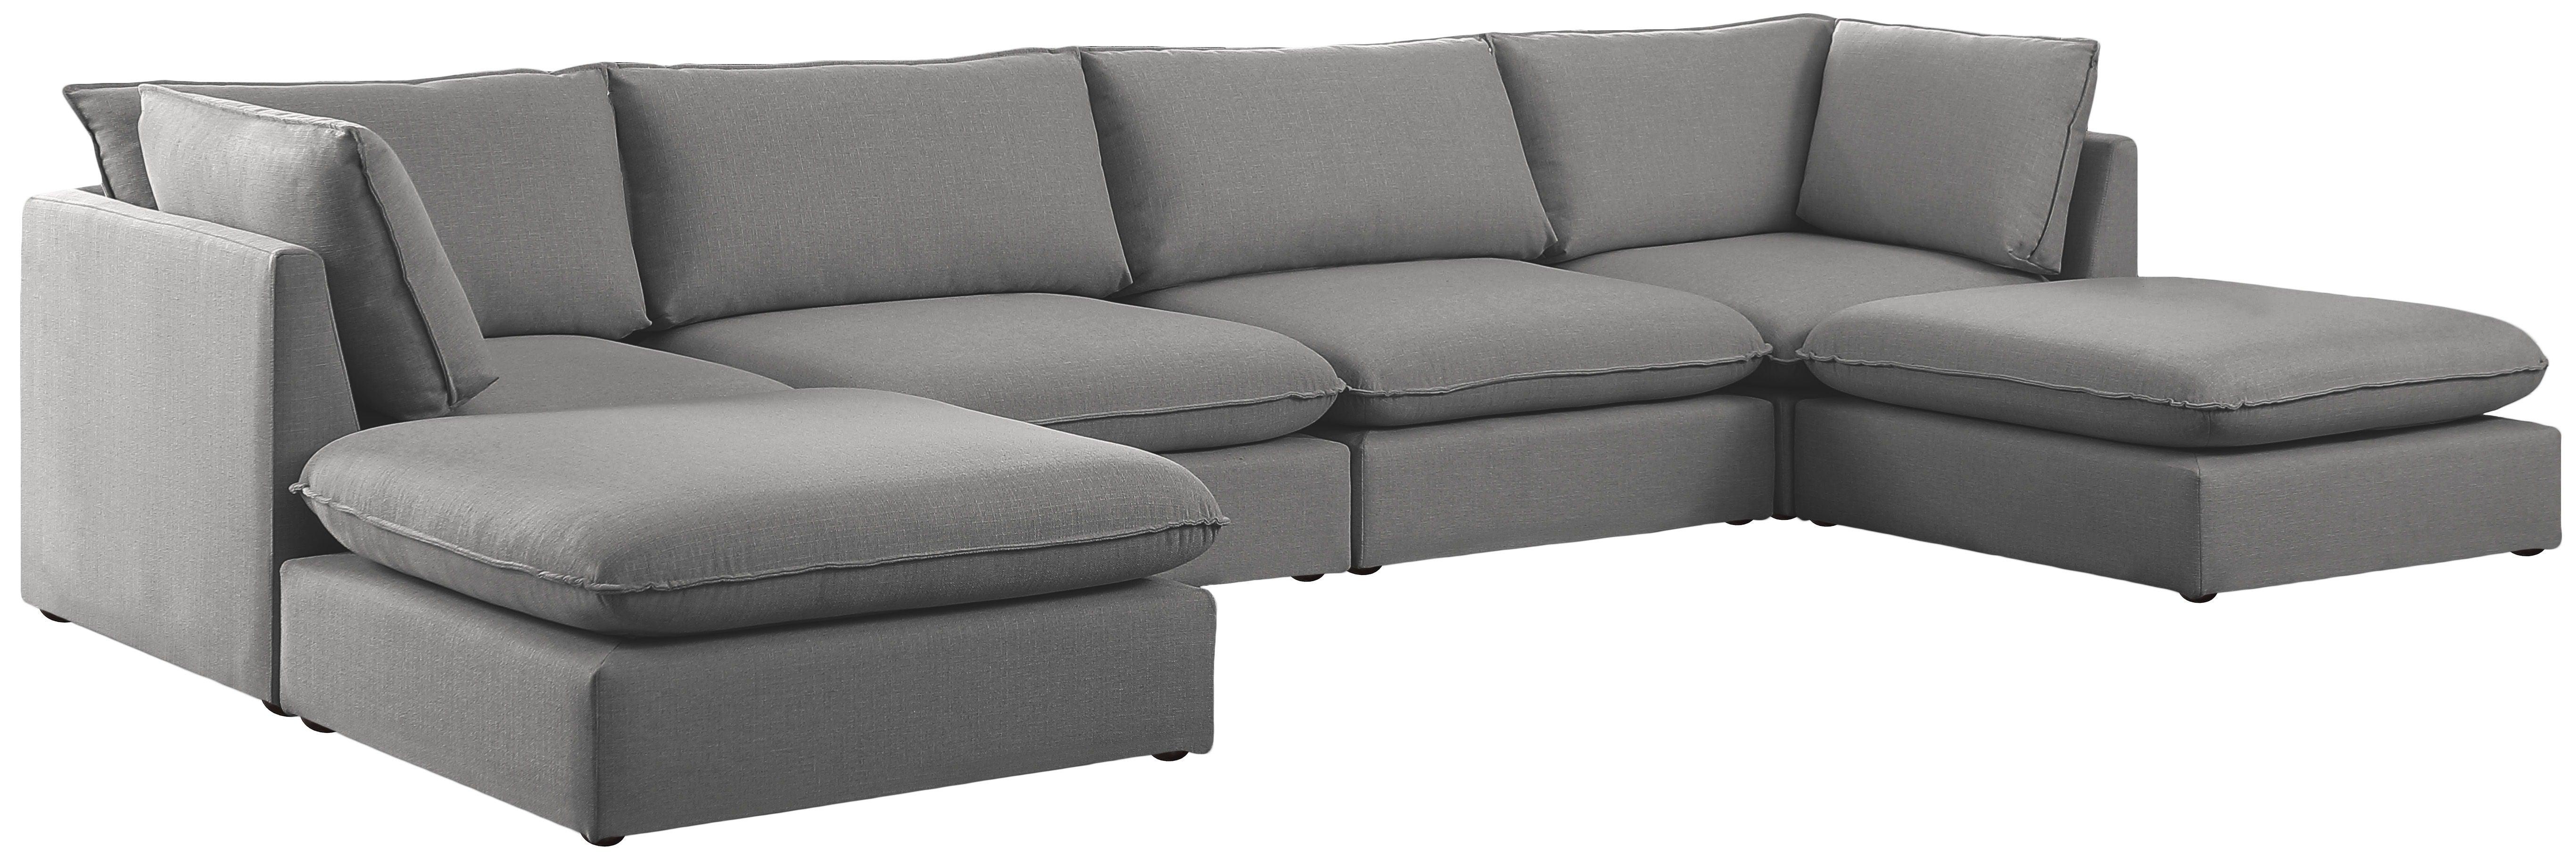 Meridian Furniture - Mackenzie - Modular Sectional 6 Piece - Gray - Fabric - Modern & Contemporary - 5th Avenue Furniture